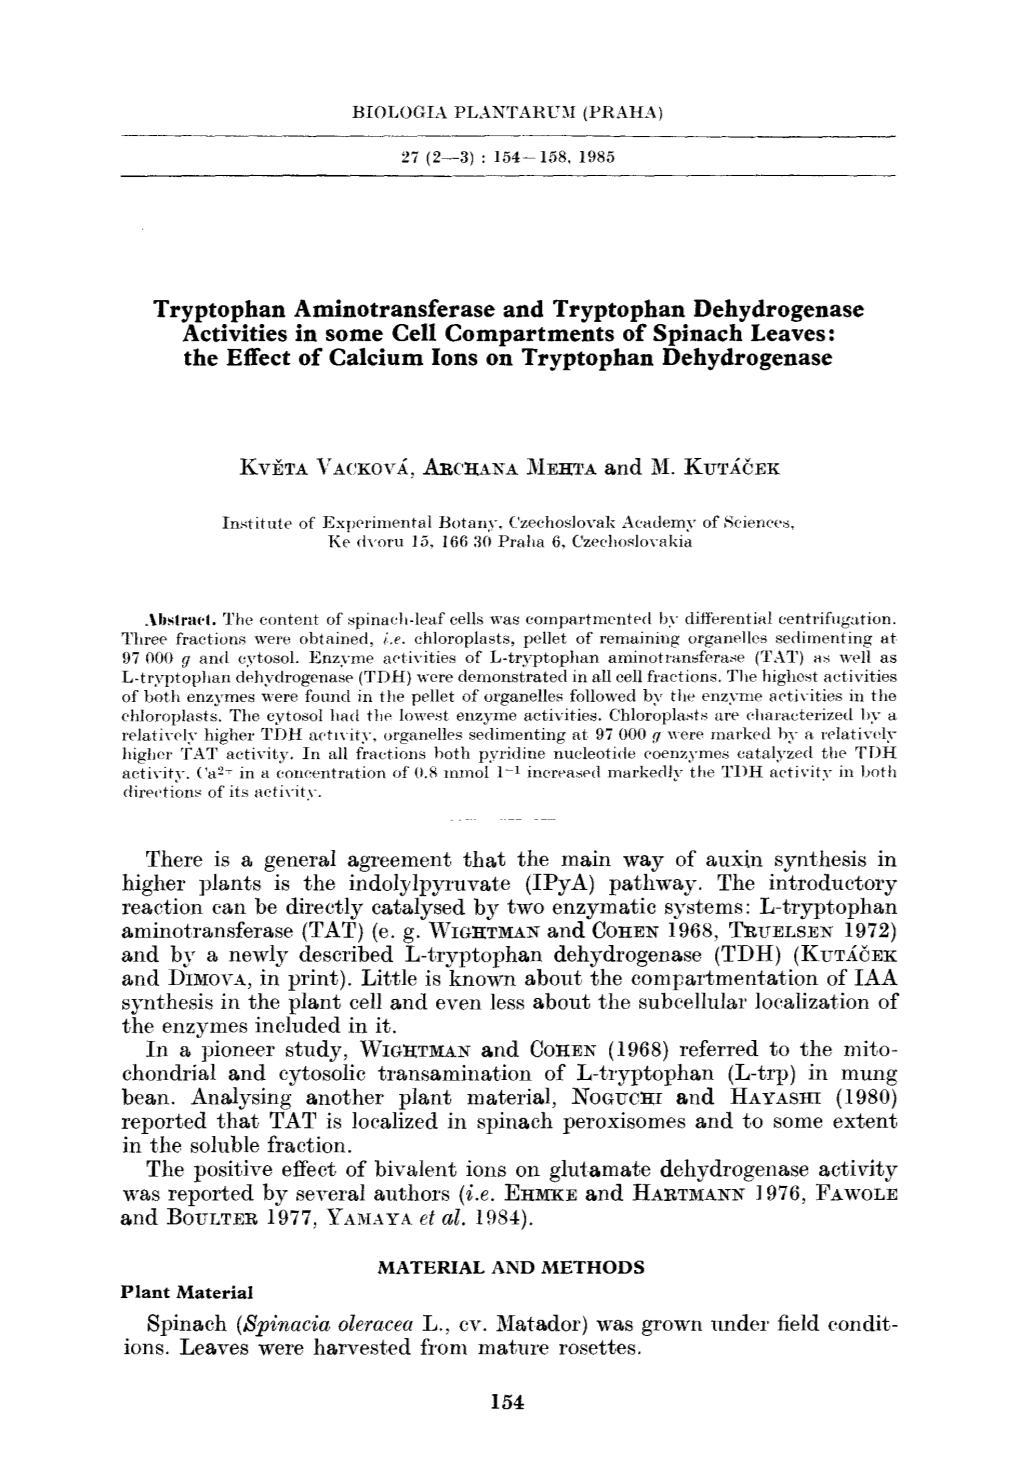 Tryptophan Aminotransferase and Tryptophan Dehydrogenase